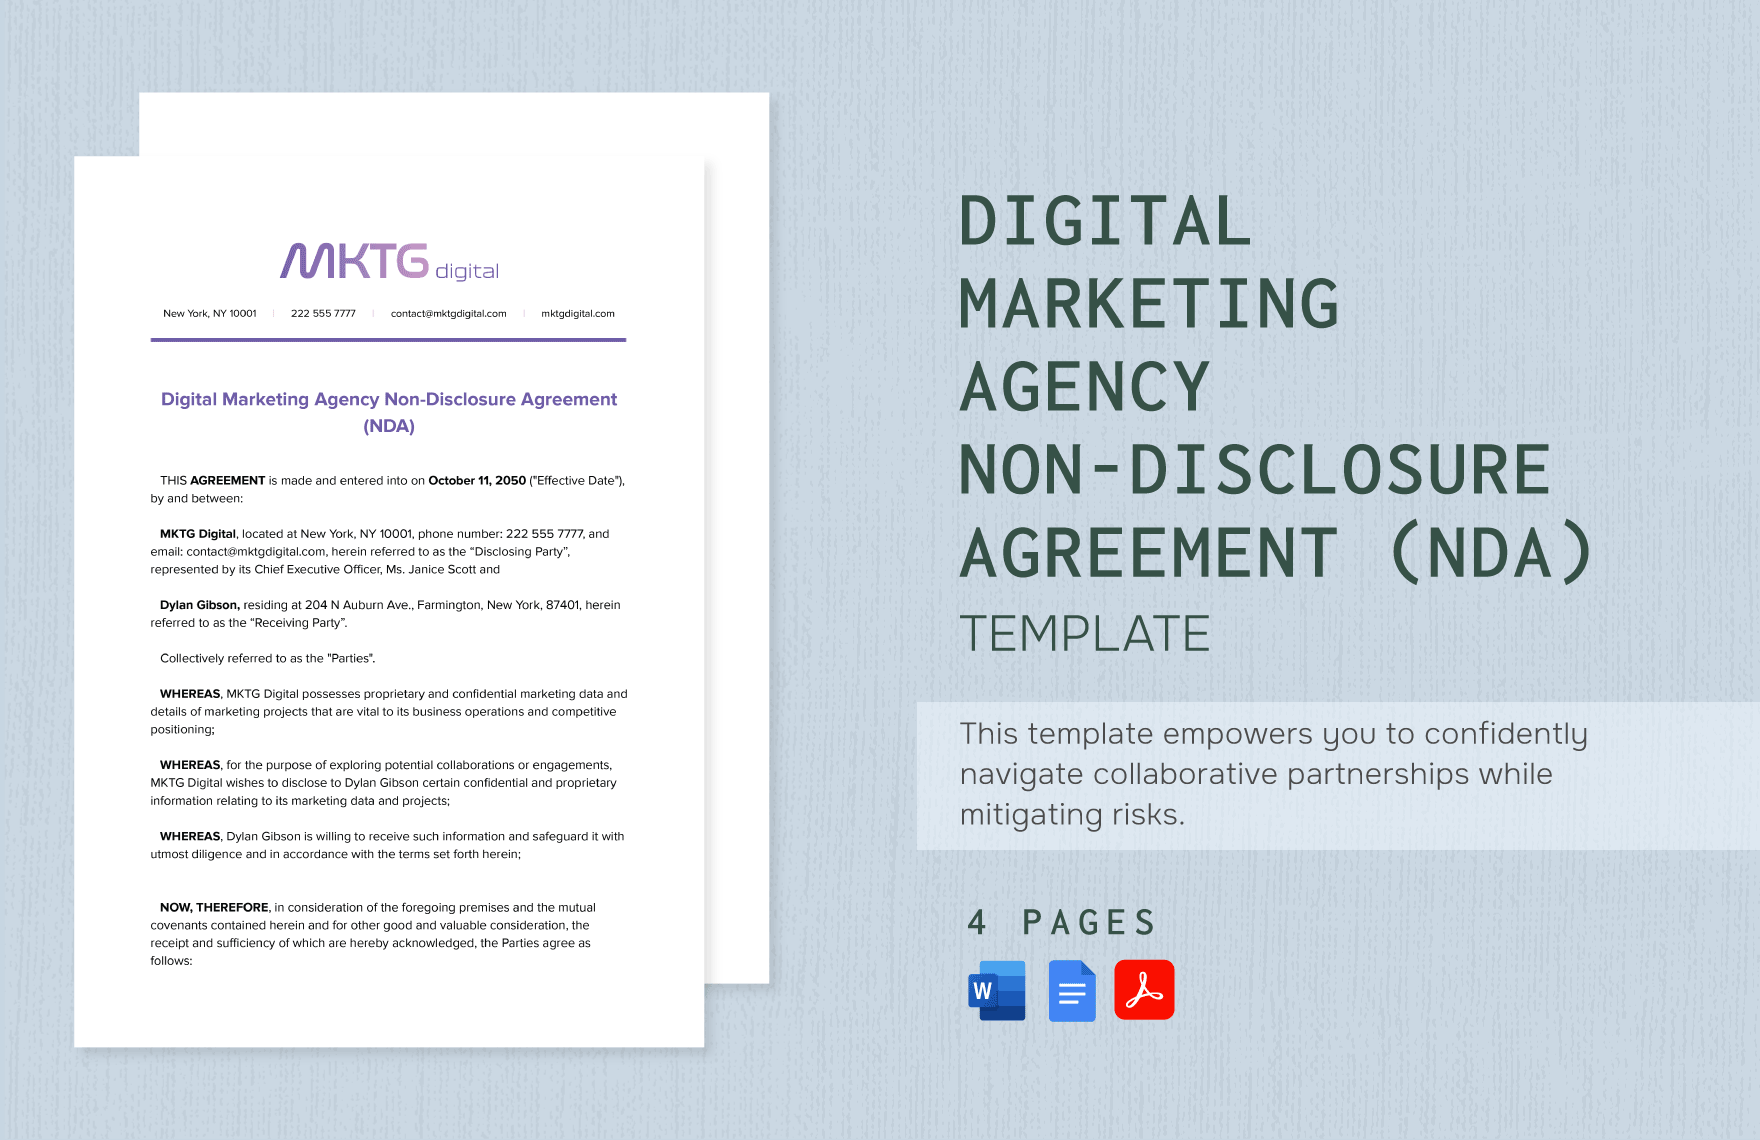 Digital Marketing Agency Non-Disclosure Agreement (NDA) Template